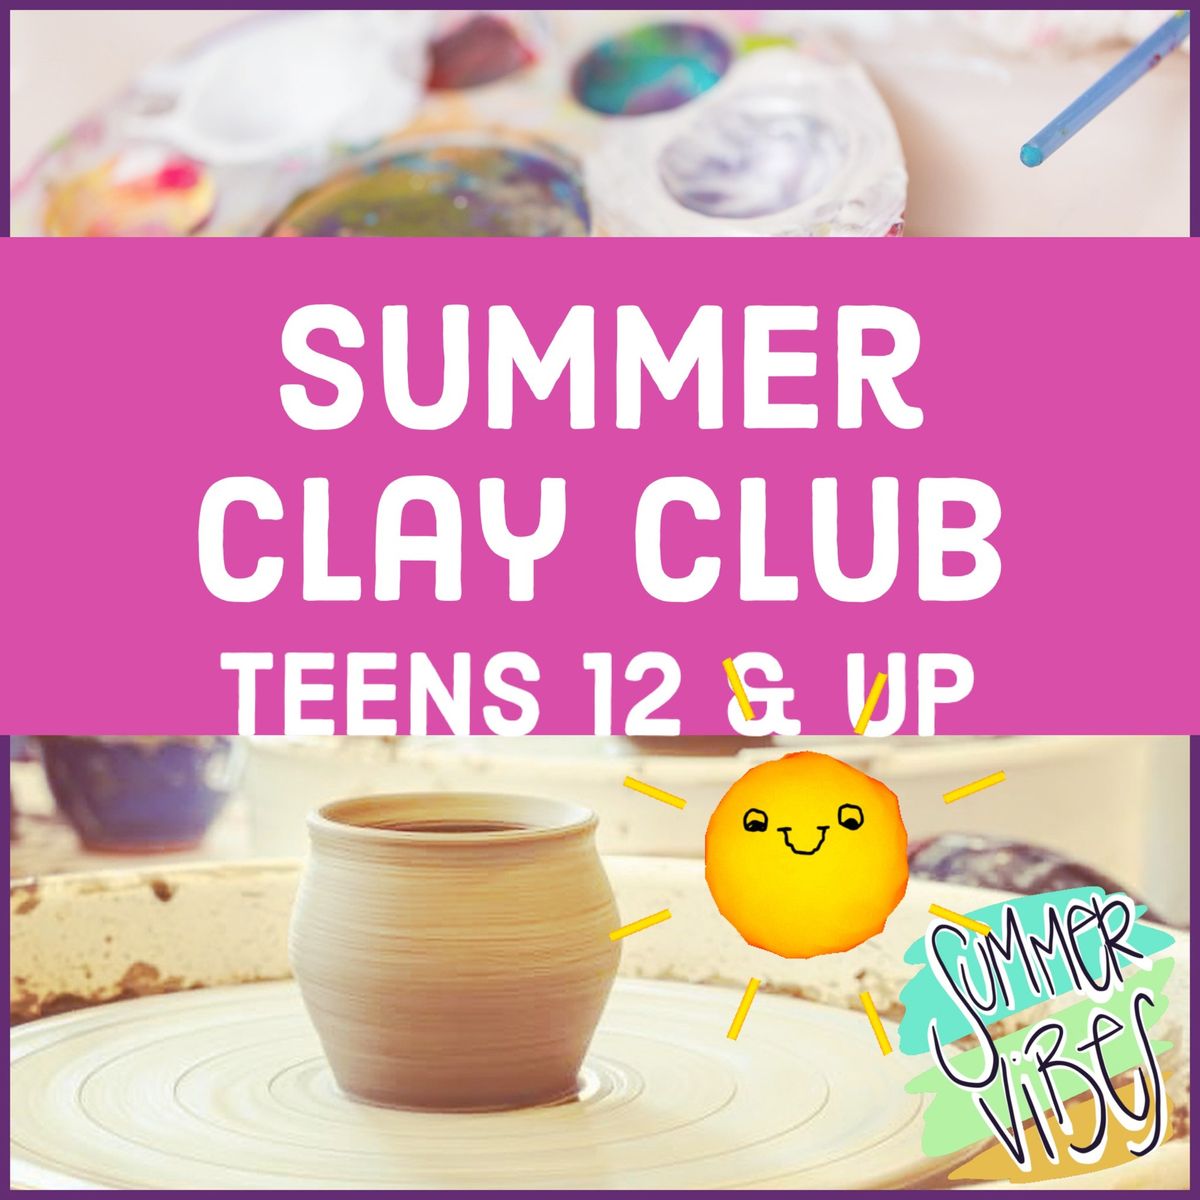 Summer Clay Club @ Enchanted Pottery Studios 